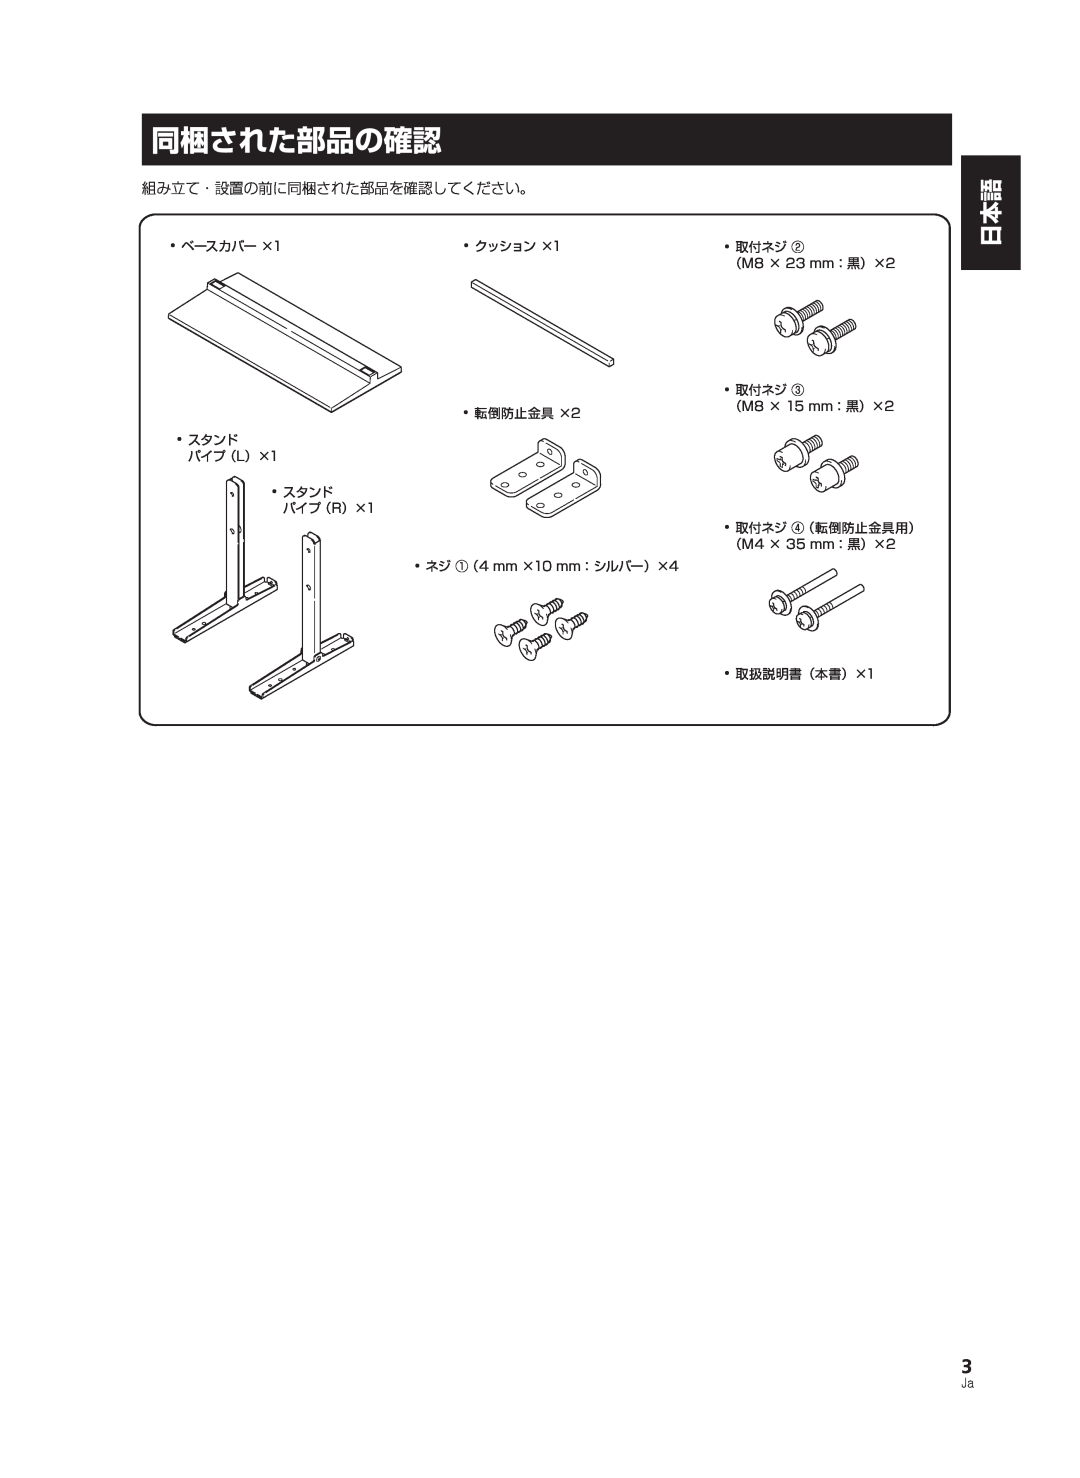 Pioneer PDK-TS33A manual 同梱された部品の確認,  ベースカバー ×1,  クッション ×1,  転倒防止金具 ×2 スタンド パイプ（L）×1  スタンド パイプ（R）×1, 取付ネジ ②, 取付ネジ ③ 